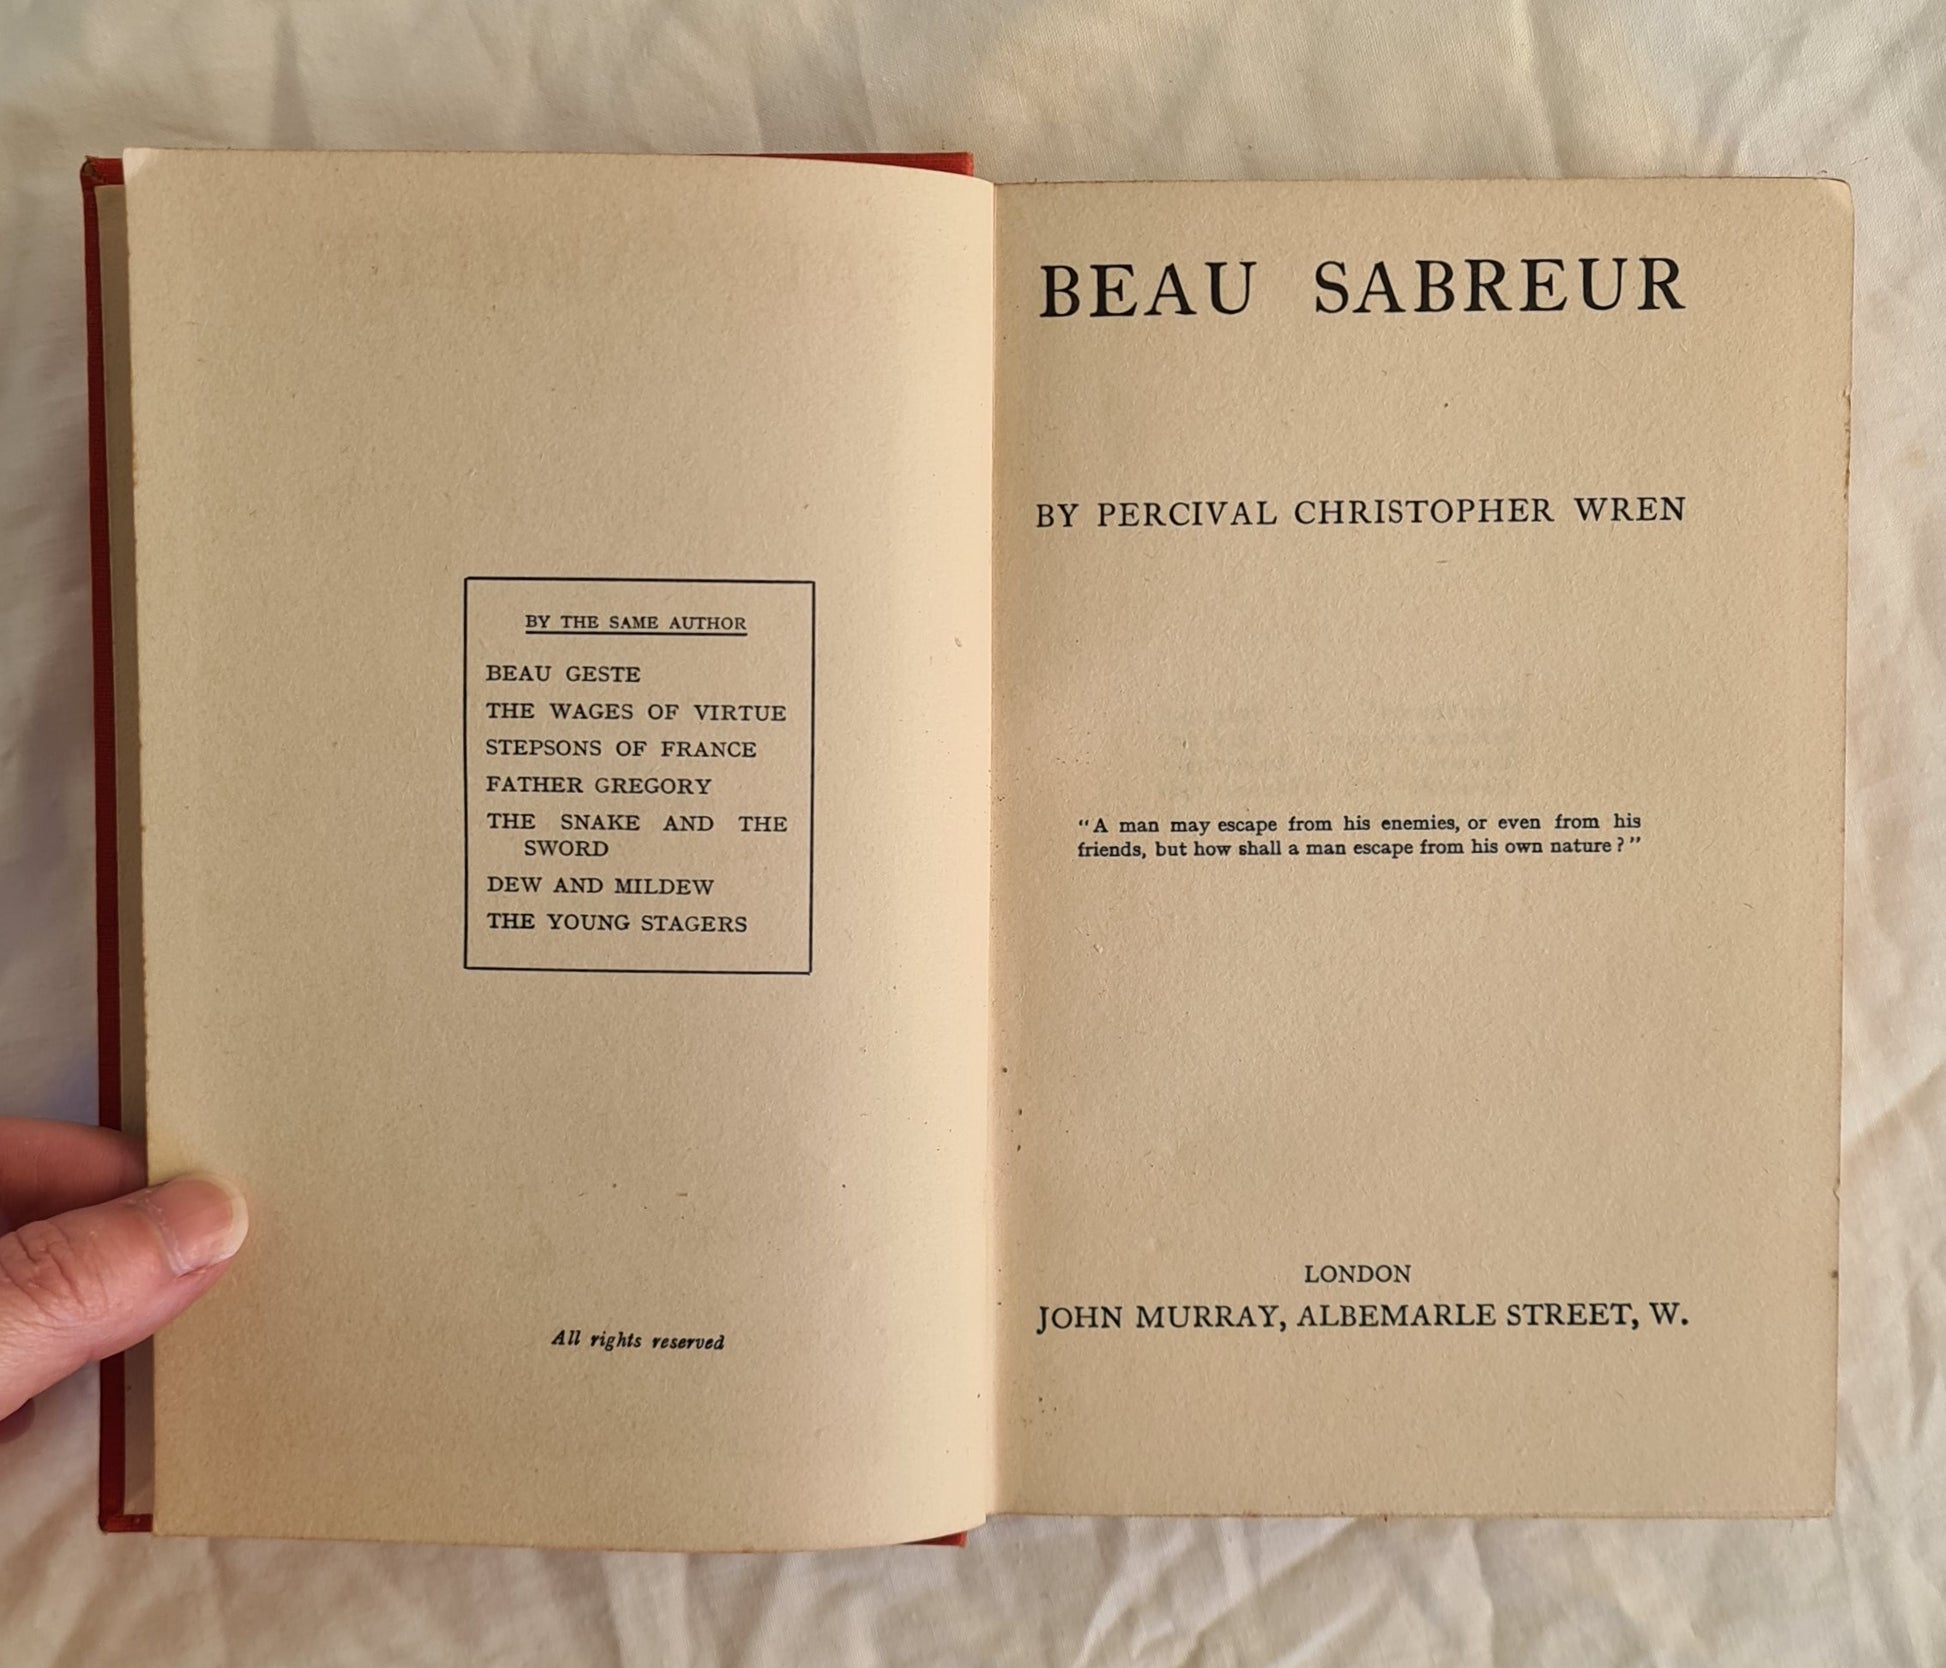 Beau Sabreur by Percival Christopher Wren